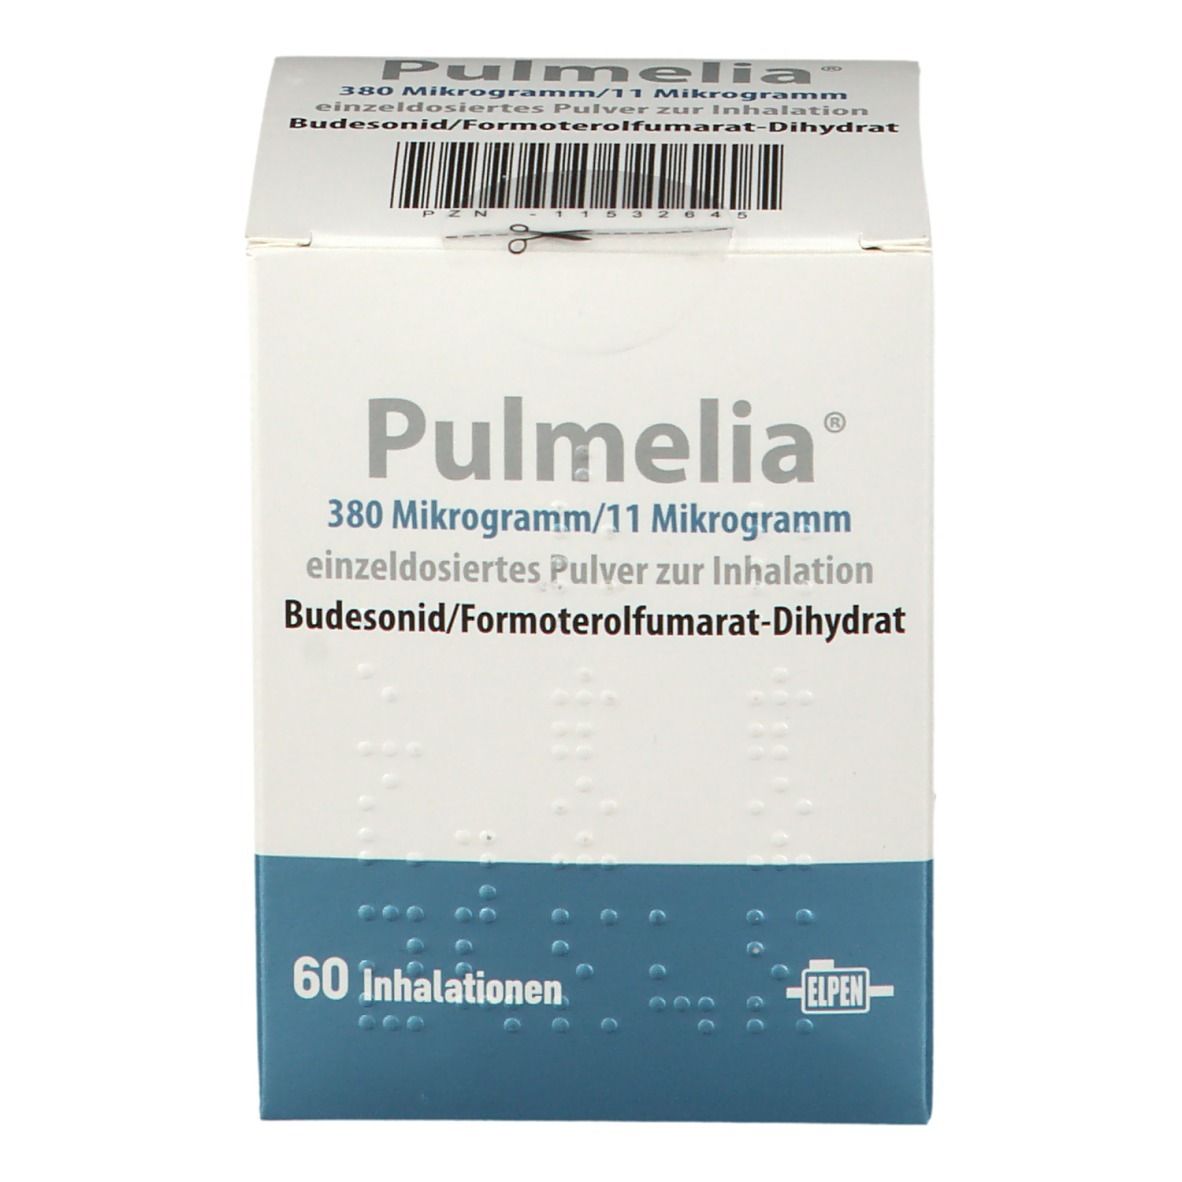 Pulmelia® 380 µg/11 µg